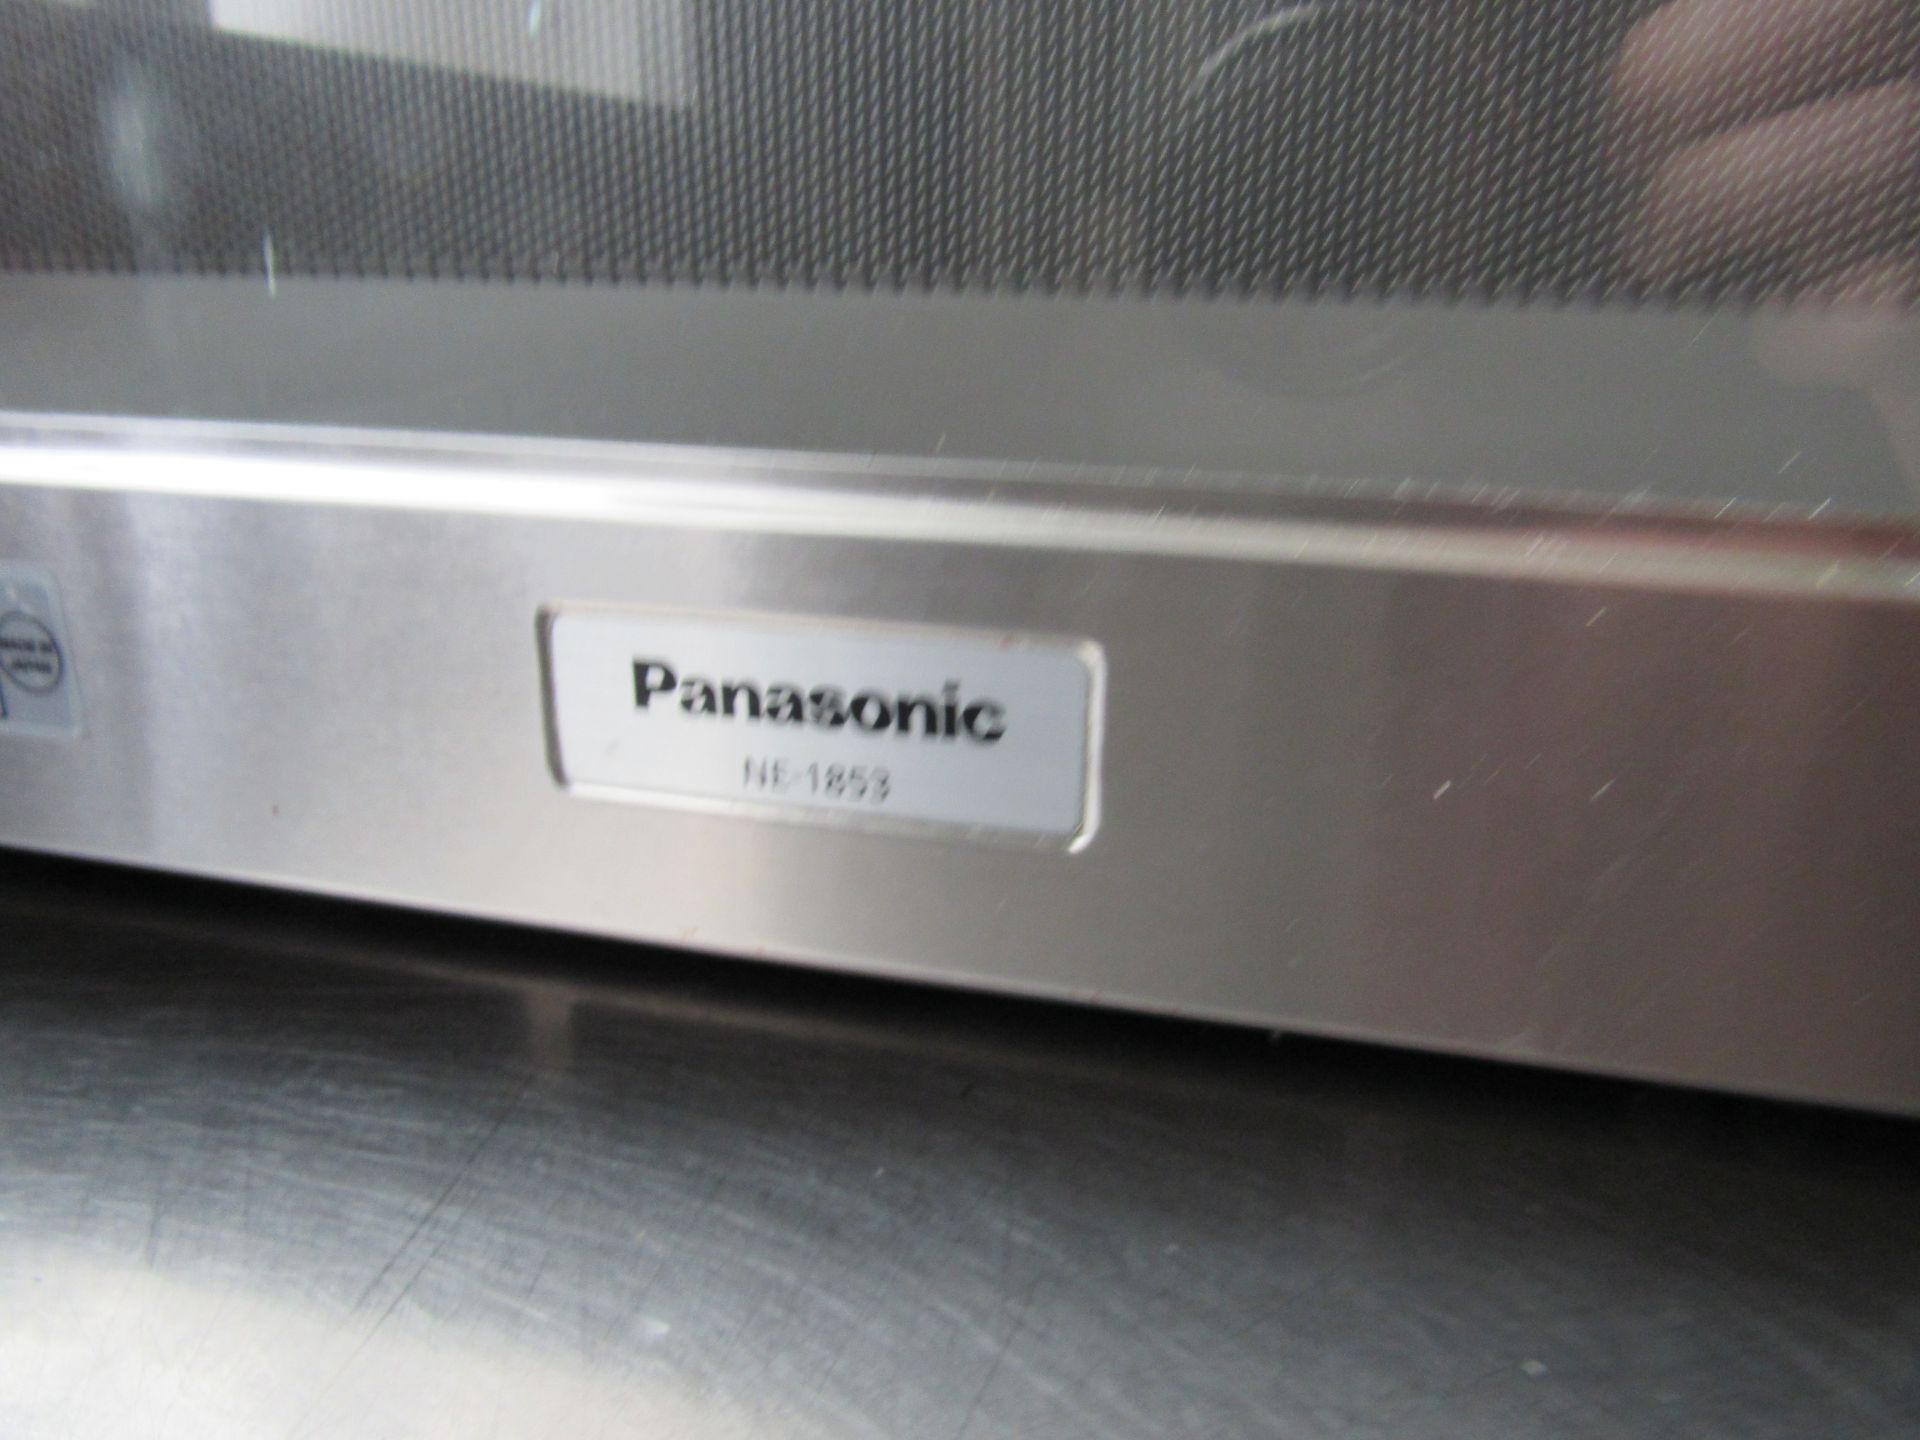 Panasonic NE-1853 Commercial Microwave - Image 2 of 2